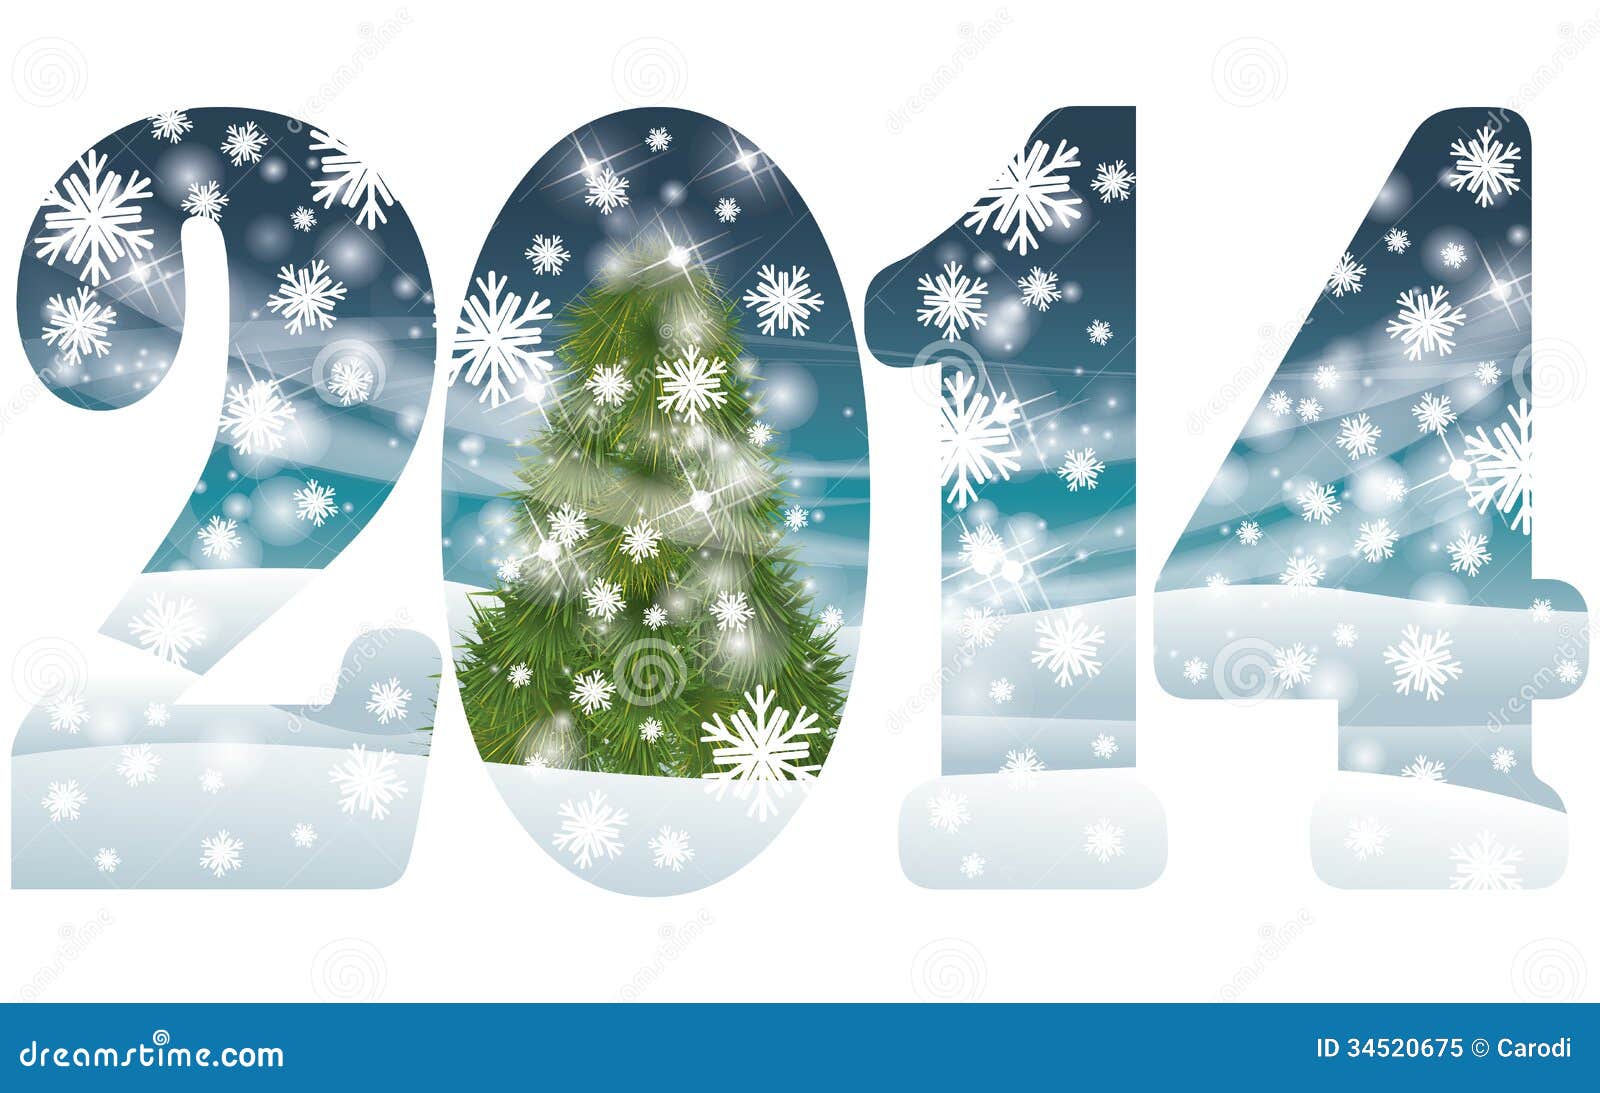 happy new year 2014 banner clip art - photo #43